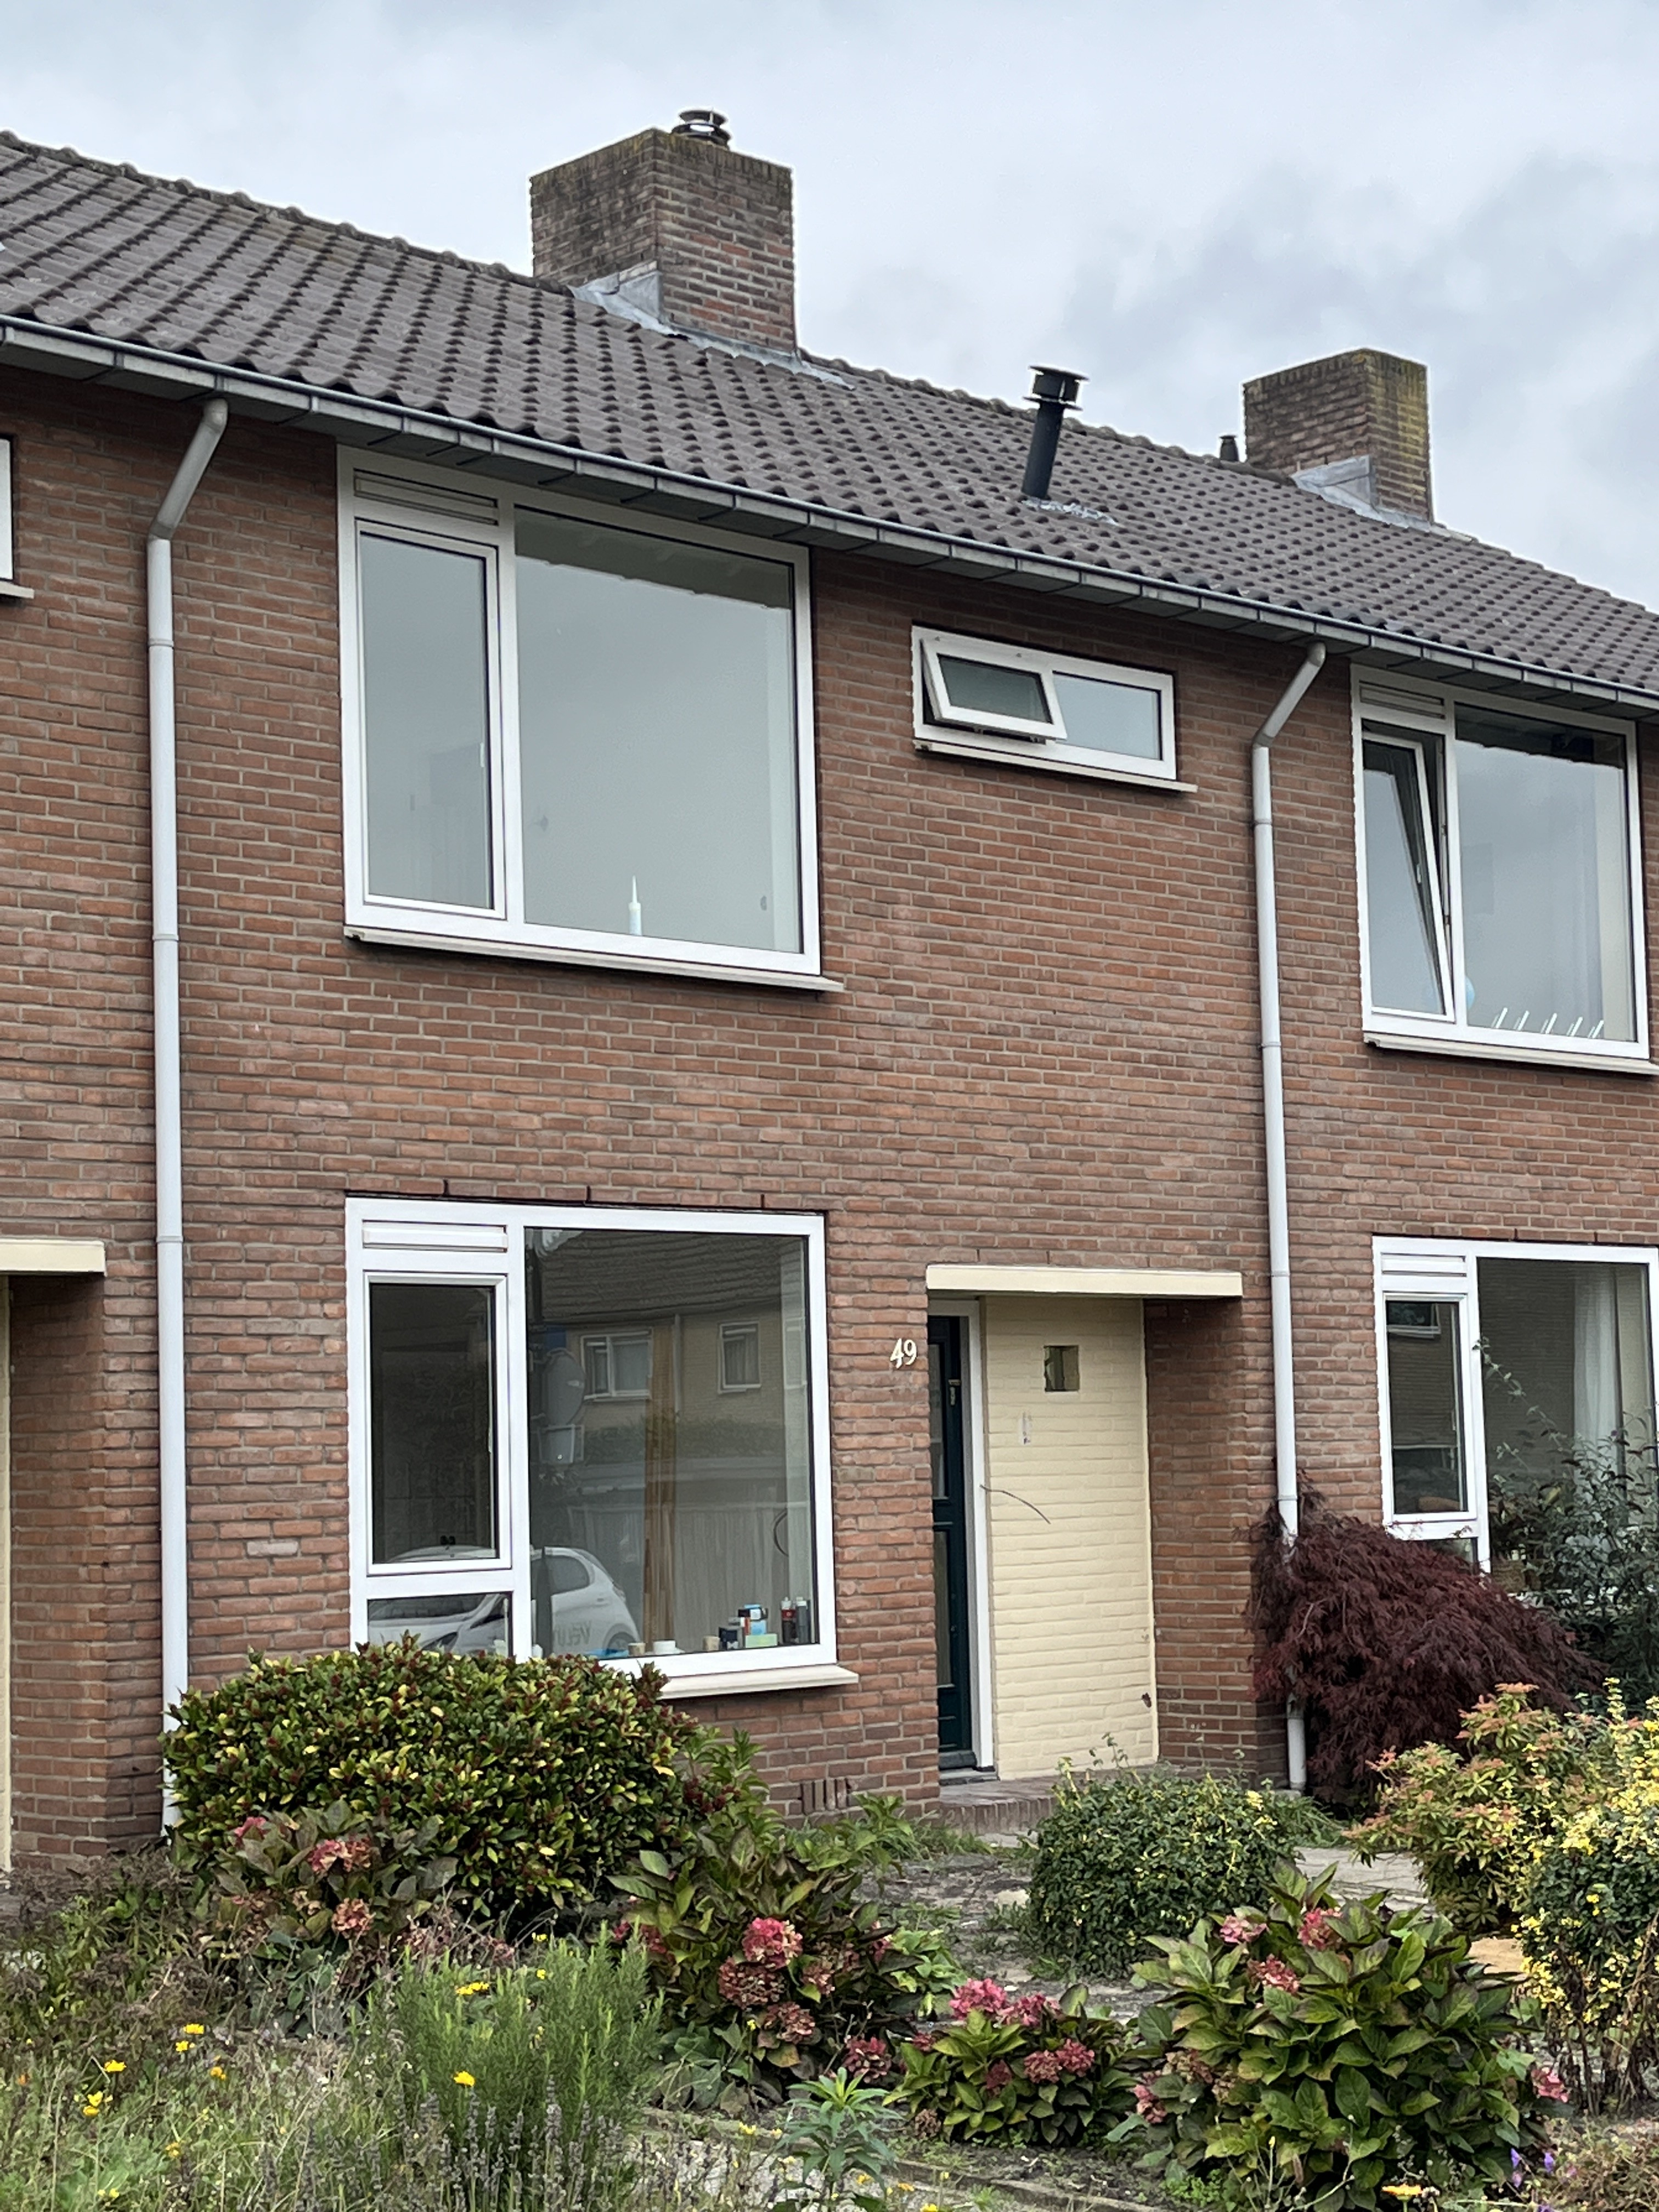 Cornelis Hendrixstraat 49, 7371 AR Loenen, Nederland